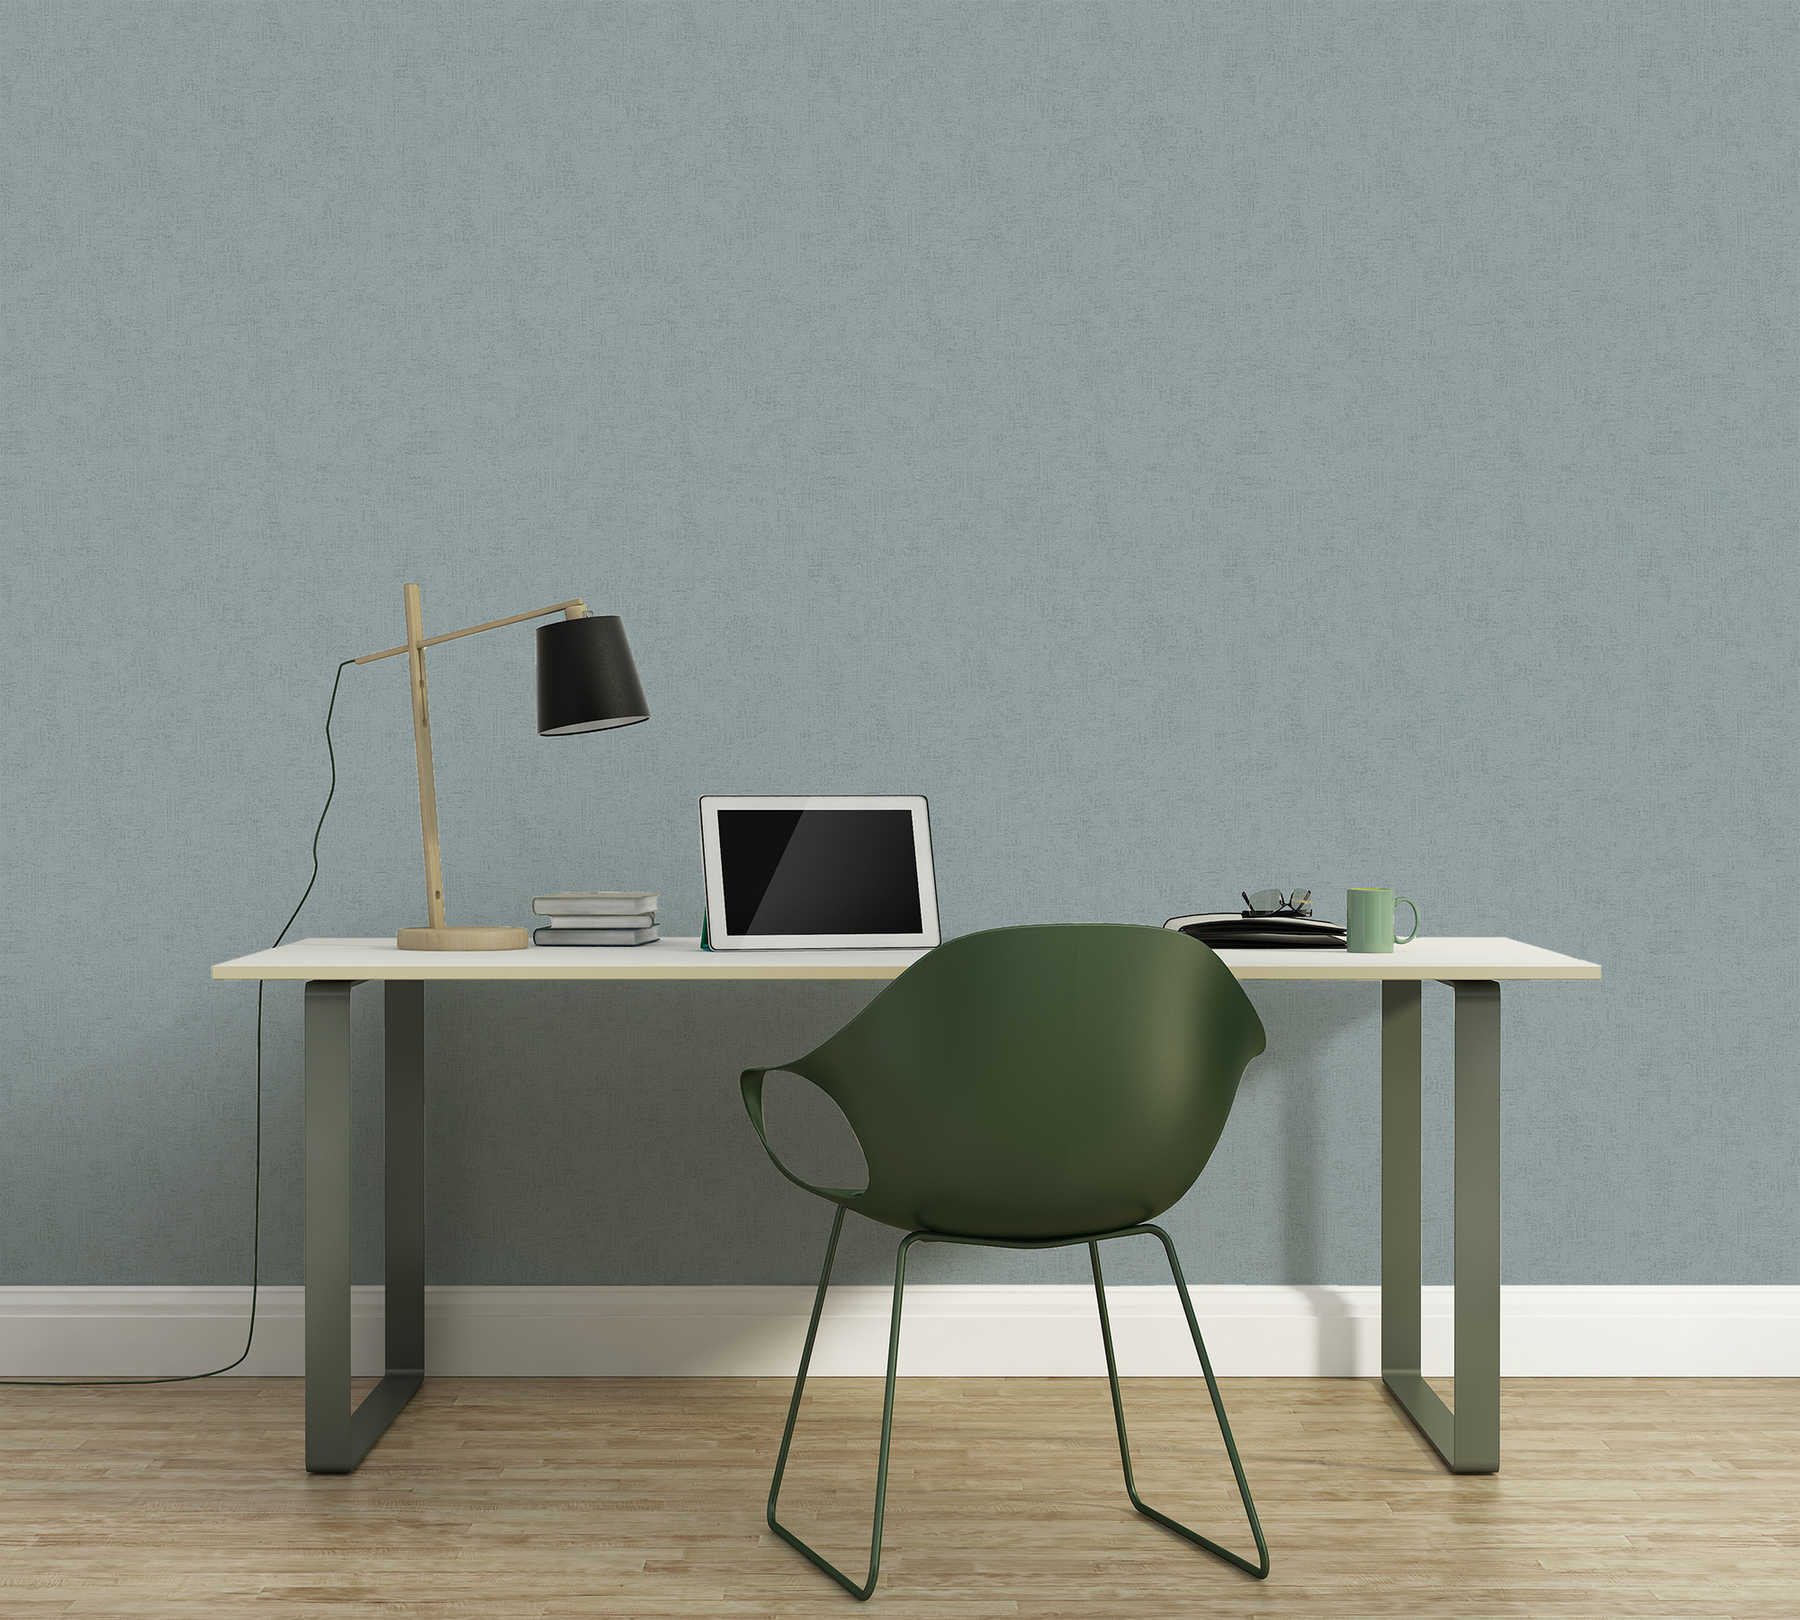             Wallpaper green-grey with texture embossing & gloss effect - green, metallic
        